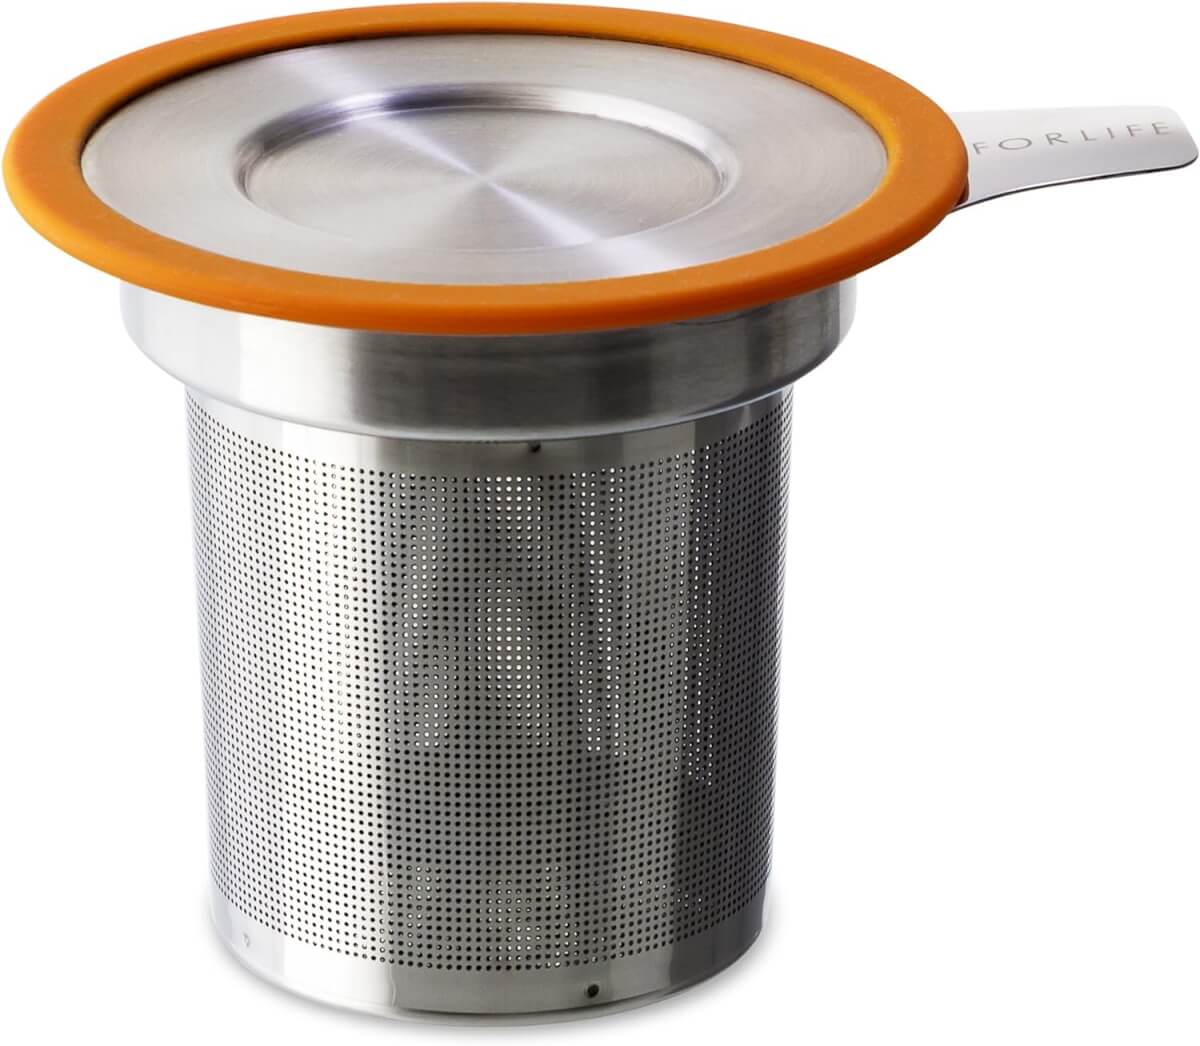 Forlife Brew-in-Mug Extra-Fine Tea Infuser with Lid